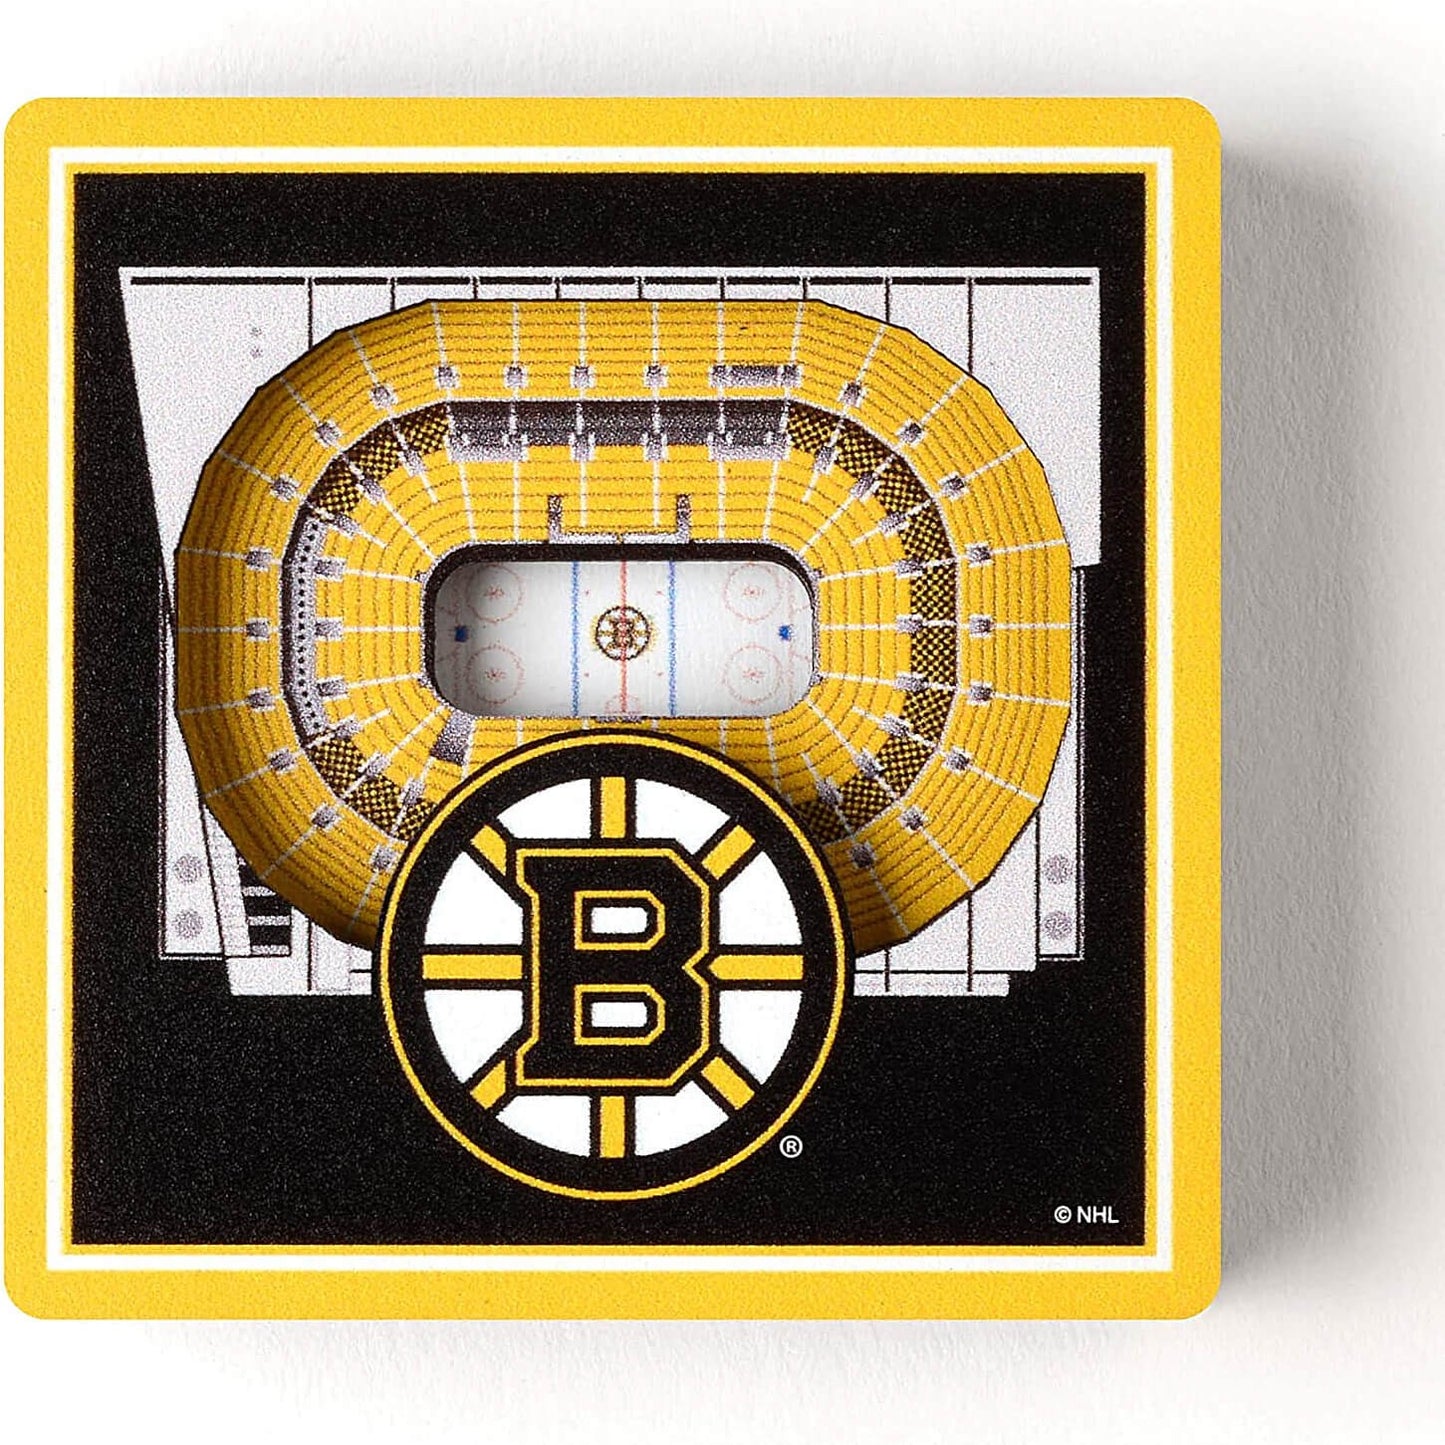 Youthefan Nhl 3D Stadiumview Magnet Boston Bruins (7Cm X 7Cm)